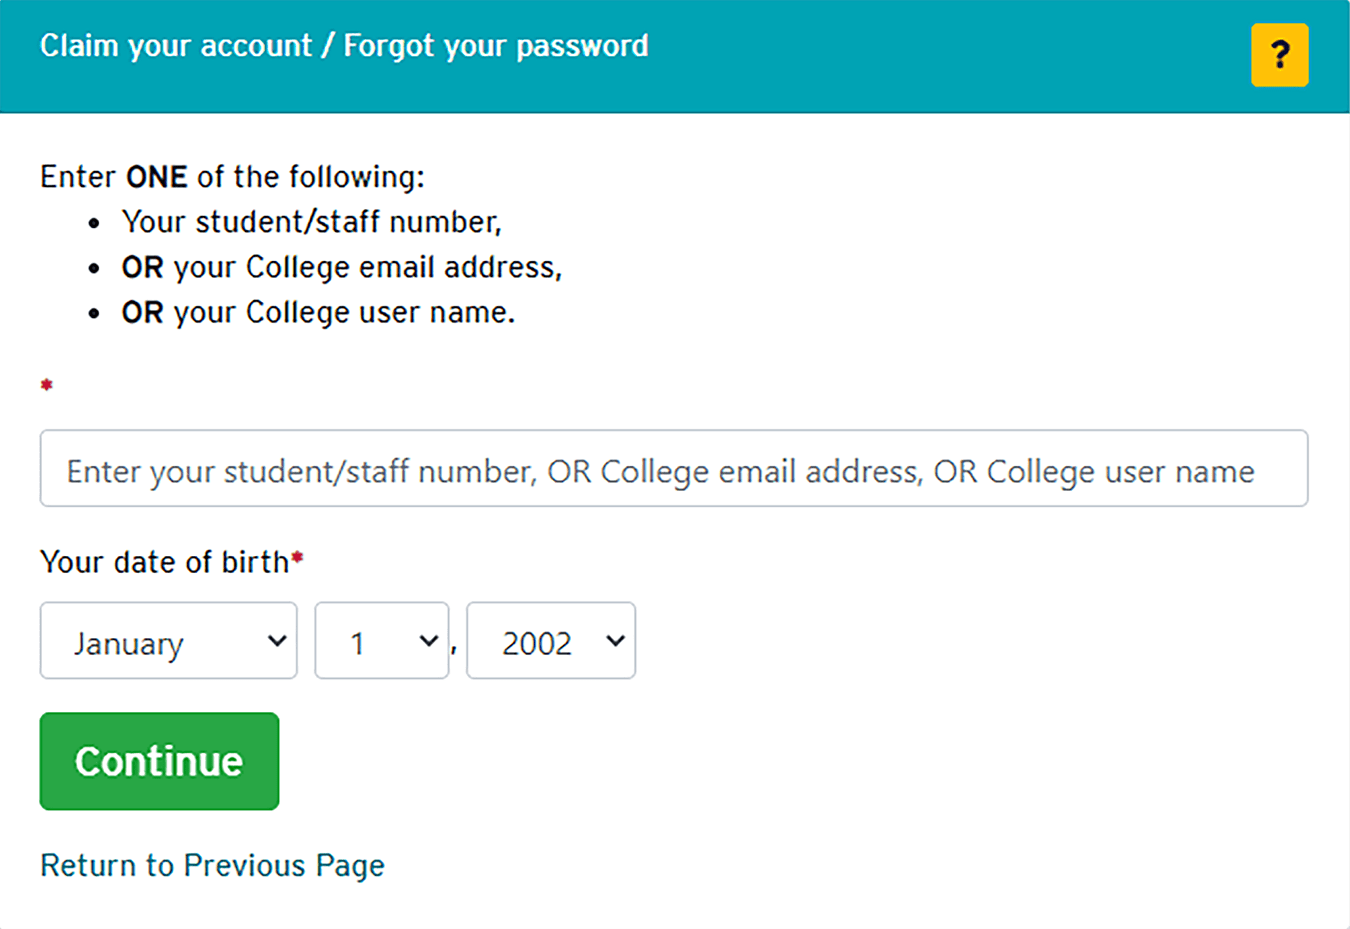 claim account / forgot password window